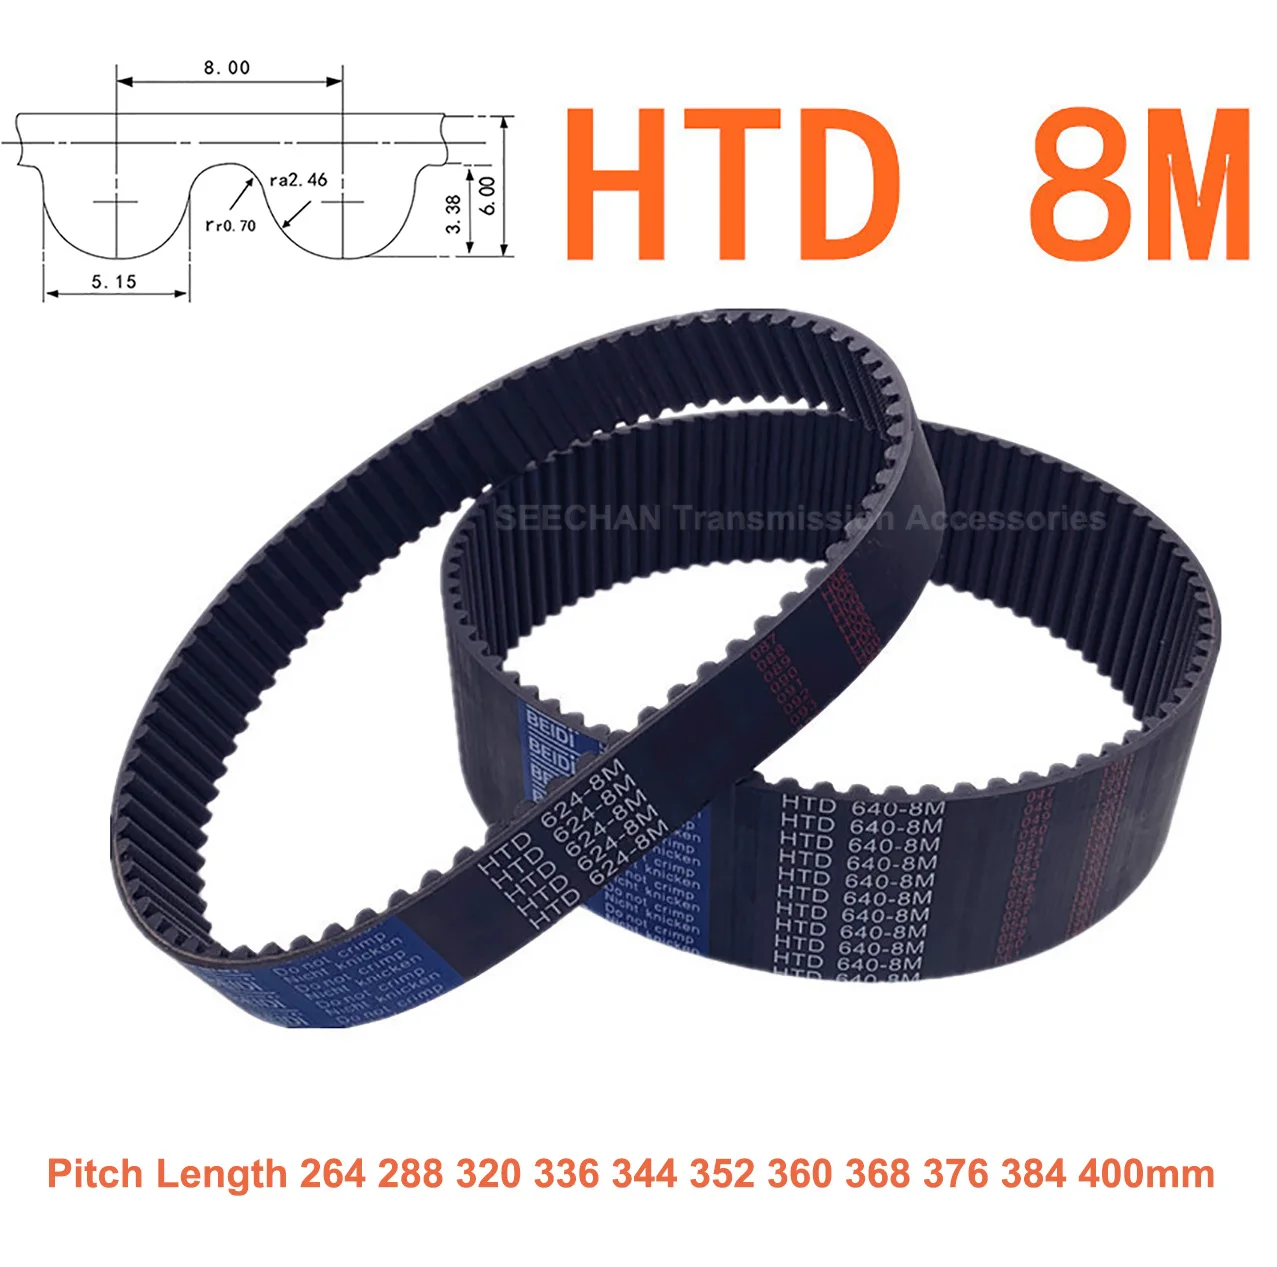 HTD 8M Rubber Closed Loop Timing Belt Width 15 20 25mm Synchronous Belt Perimeter 264 288 320 336 344 352 360 368 376 384 400mm